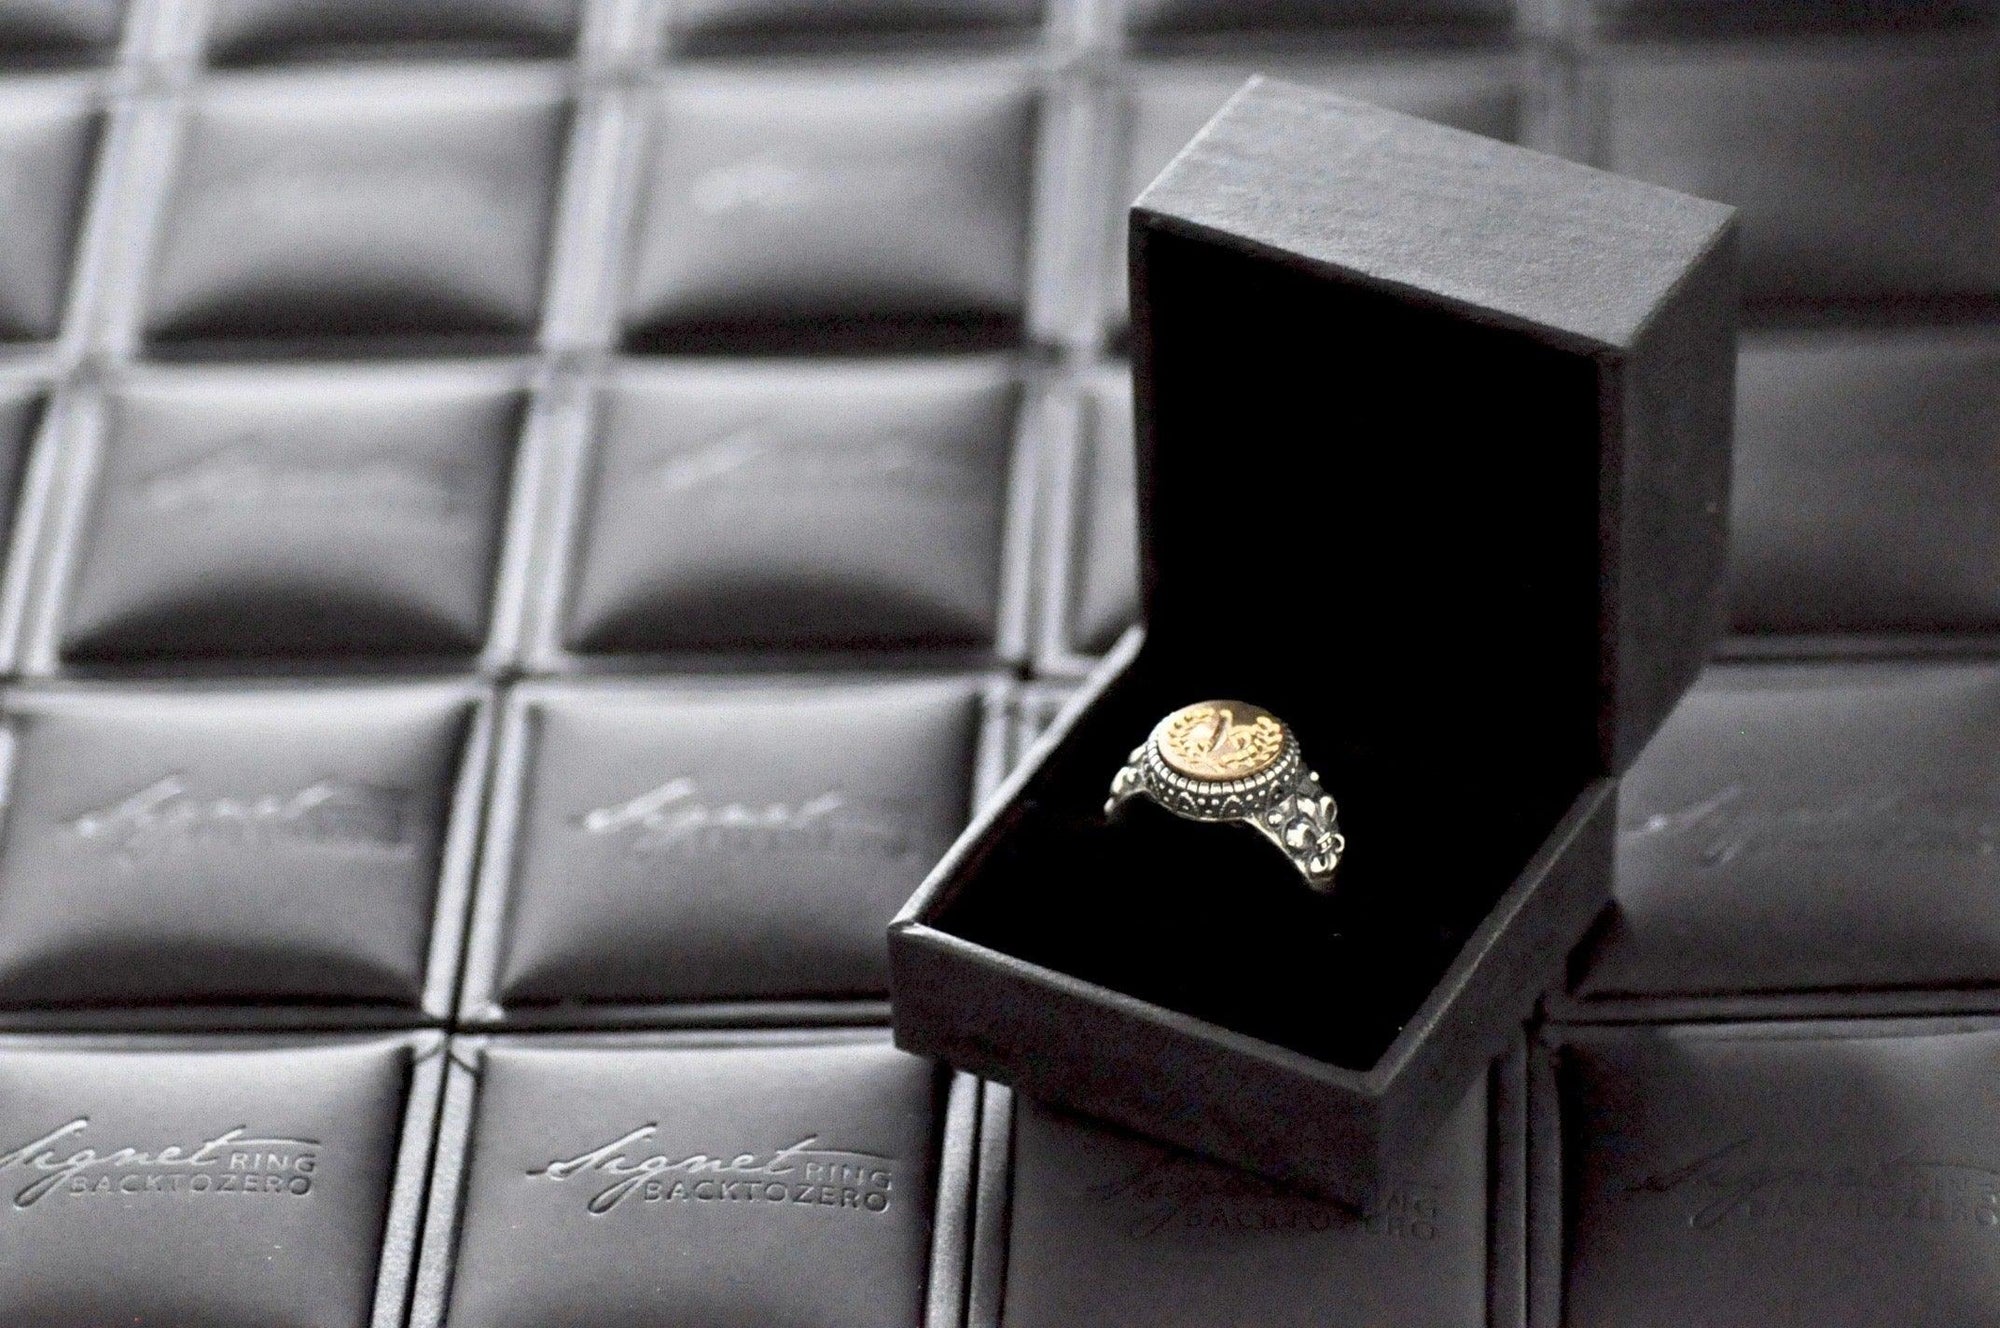 Fleur De Lis Signet Ring - Backtozero B20 - 12f, 12mm, 12mm ring, accessory, Fleur de Lis, him, jewelry, ring, signet ring, size 10, size 11, size 8, size 9, wax seal, wax seal ring, wax seal stamp